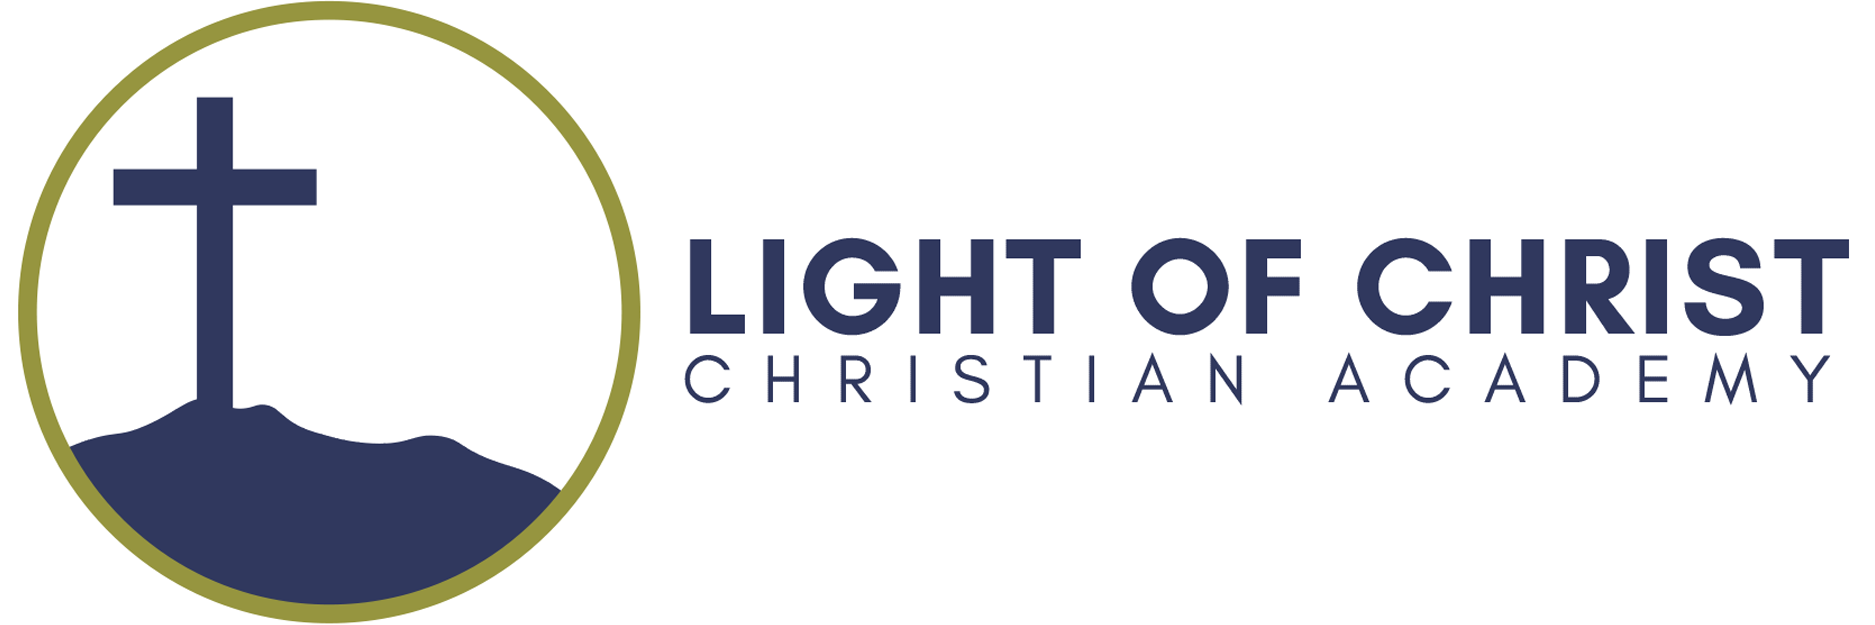 Light of Christ Christian Academy